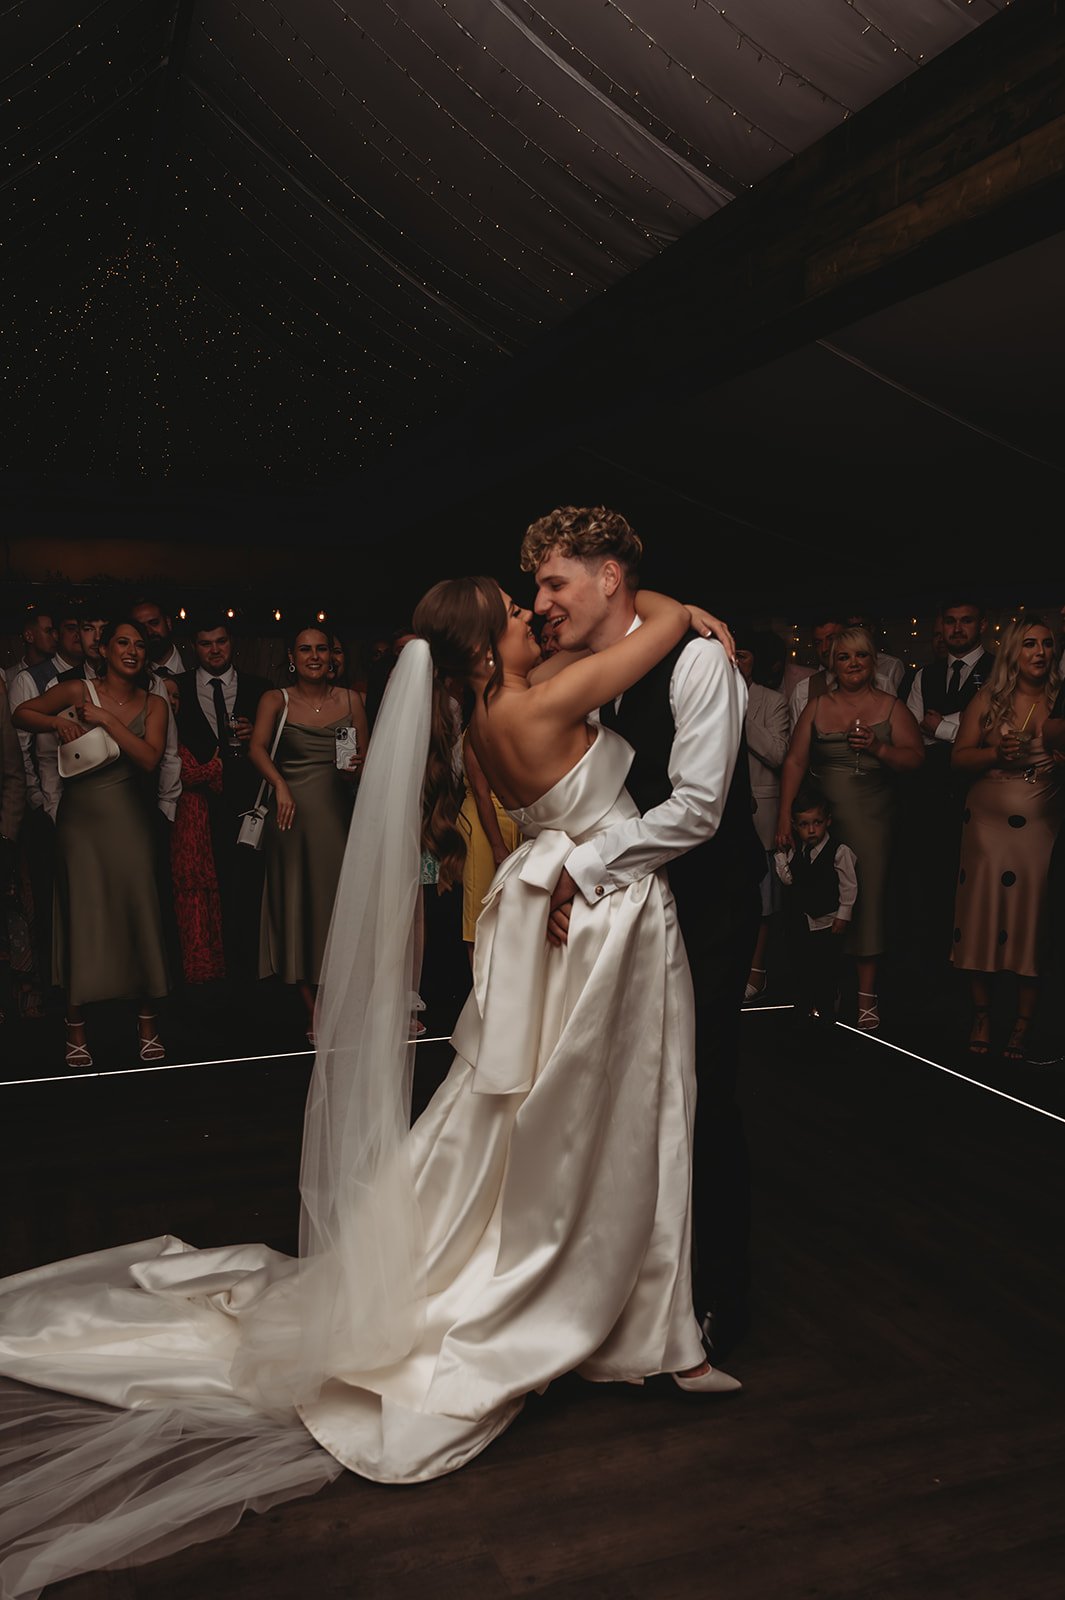 Normans-Wedding-Photography4493-Enhanced-NR.jpg